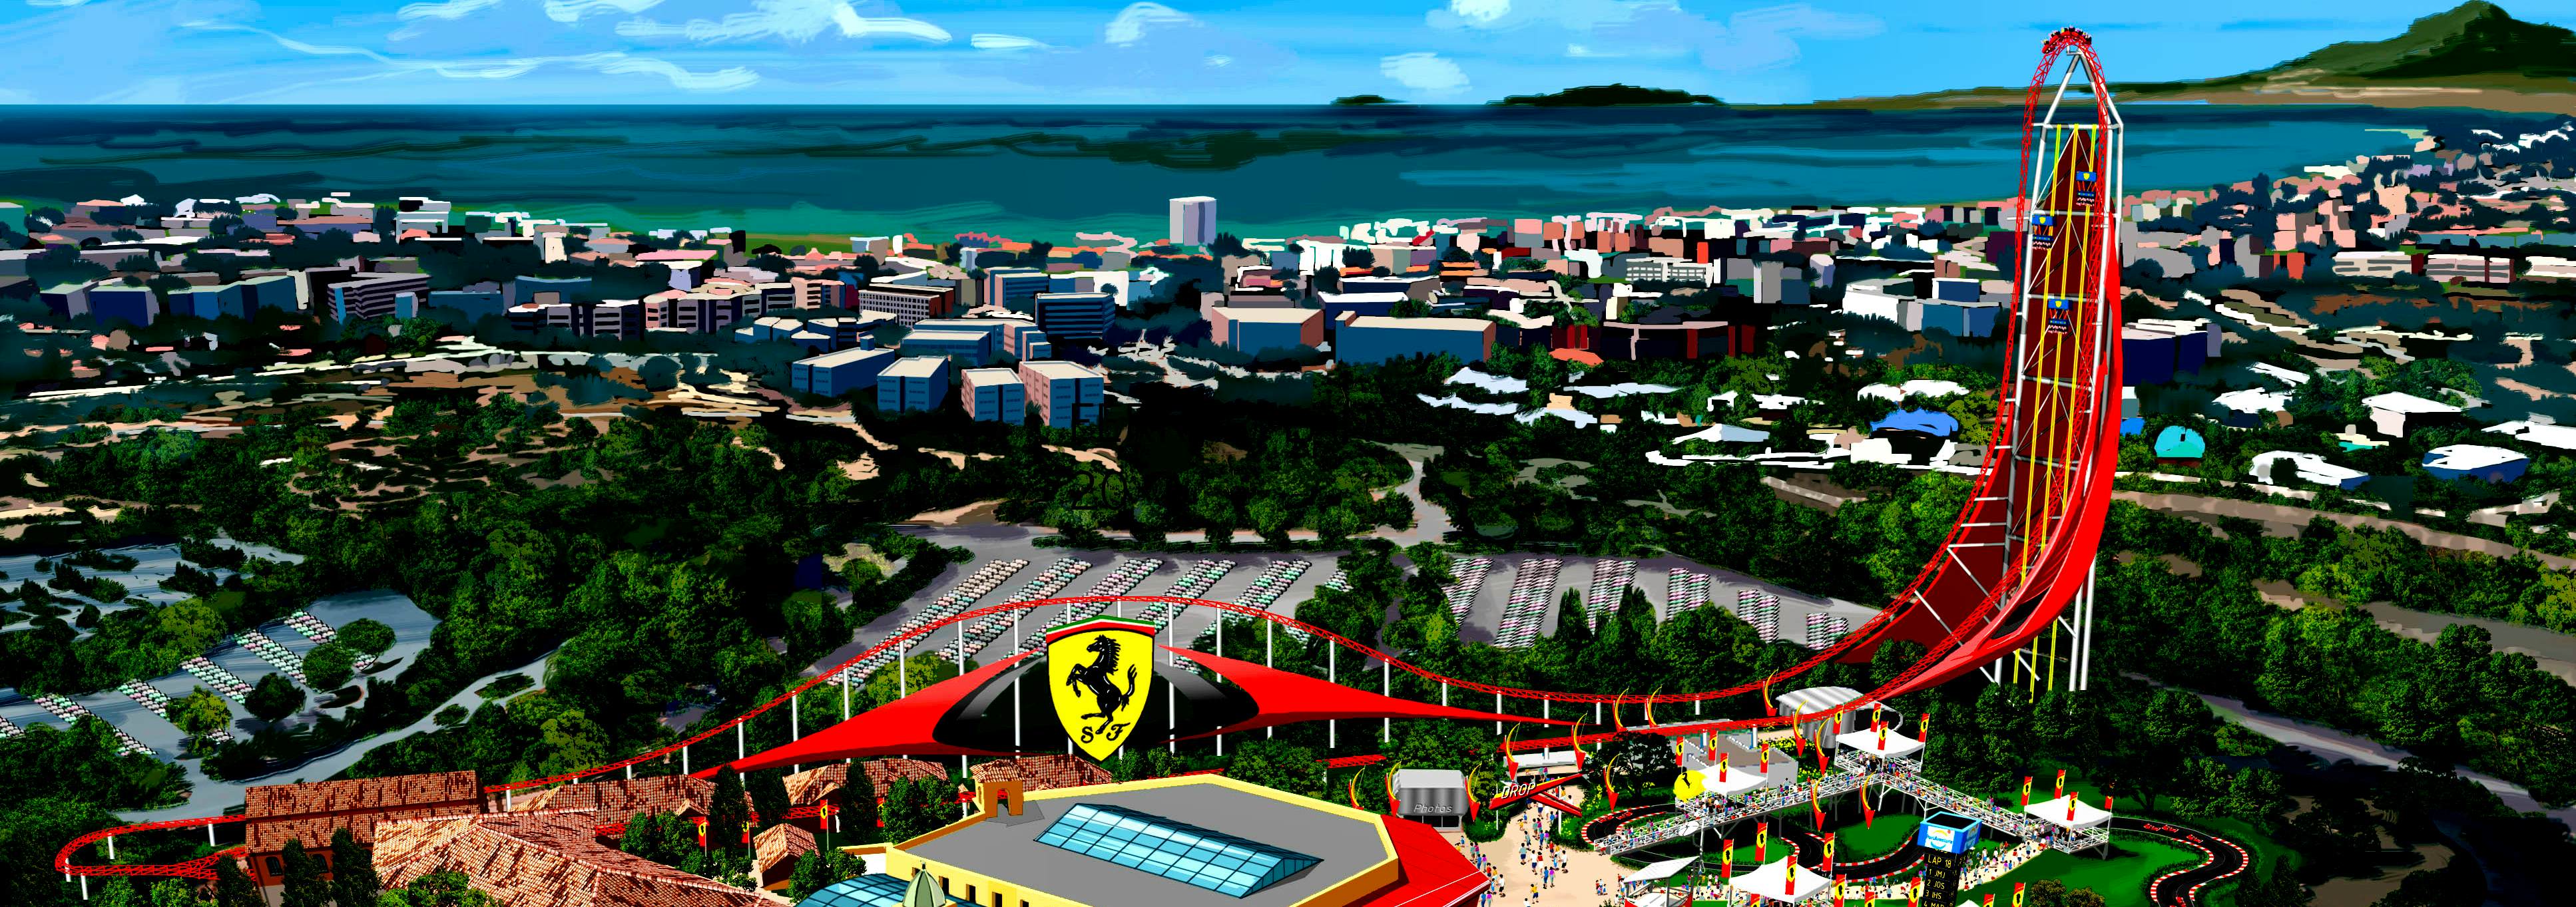 Skip the Line: PortAventura Park & Caribe Aquatic Park, & Ferrari Land Ticket